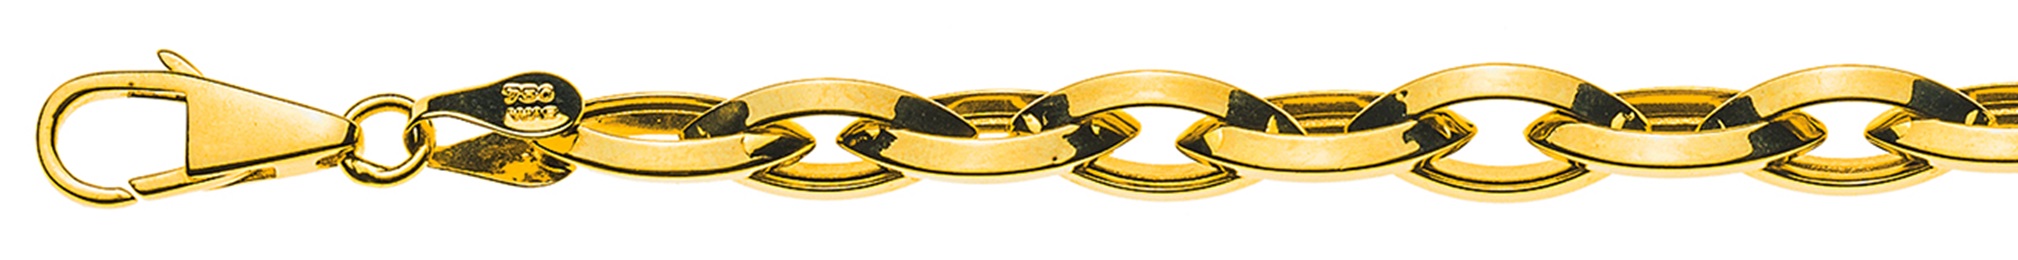 AURONOS Prestige Collier en or jaune 18K navette semi-massif 45cm 6.6mm